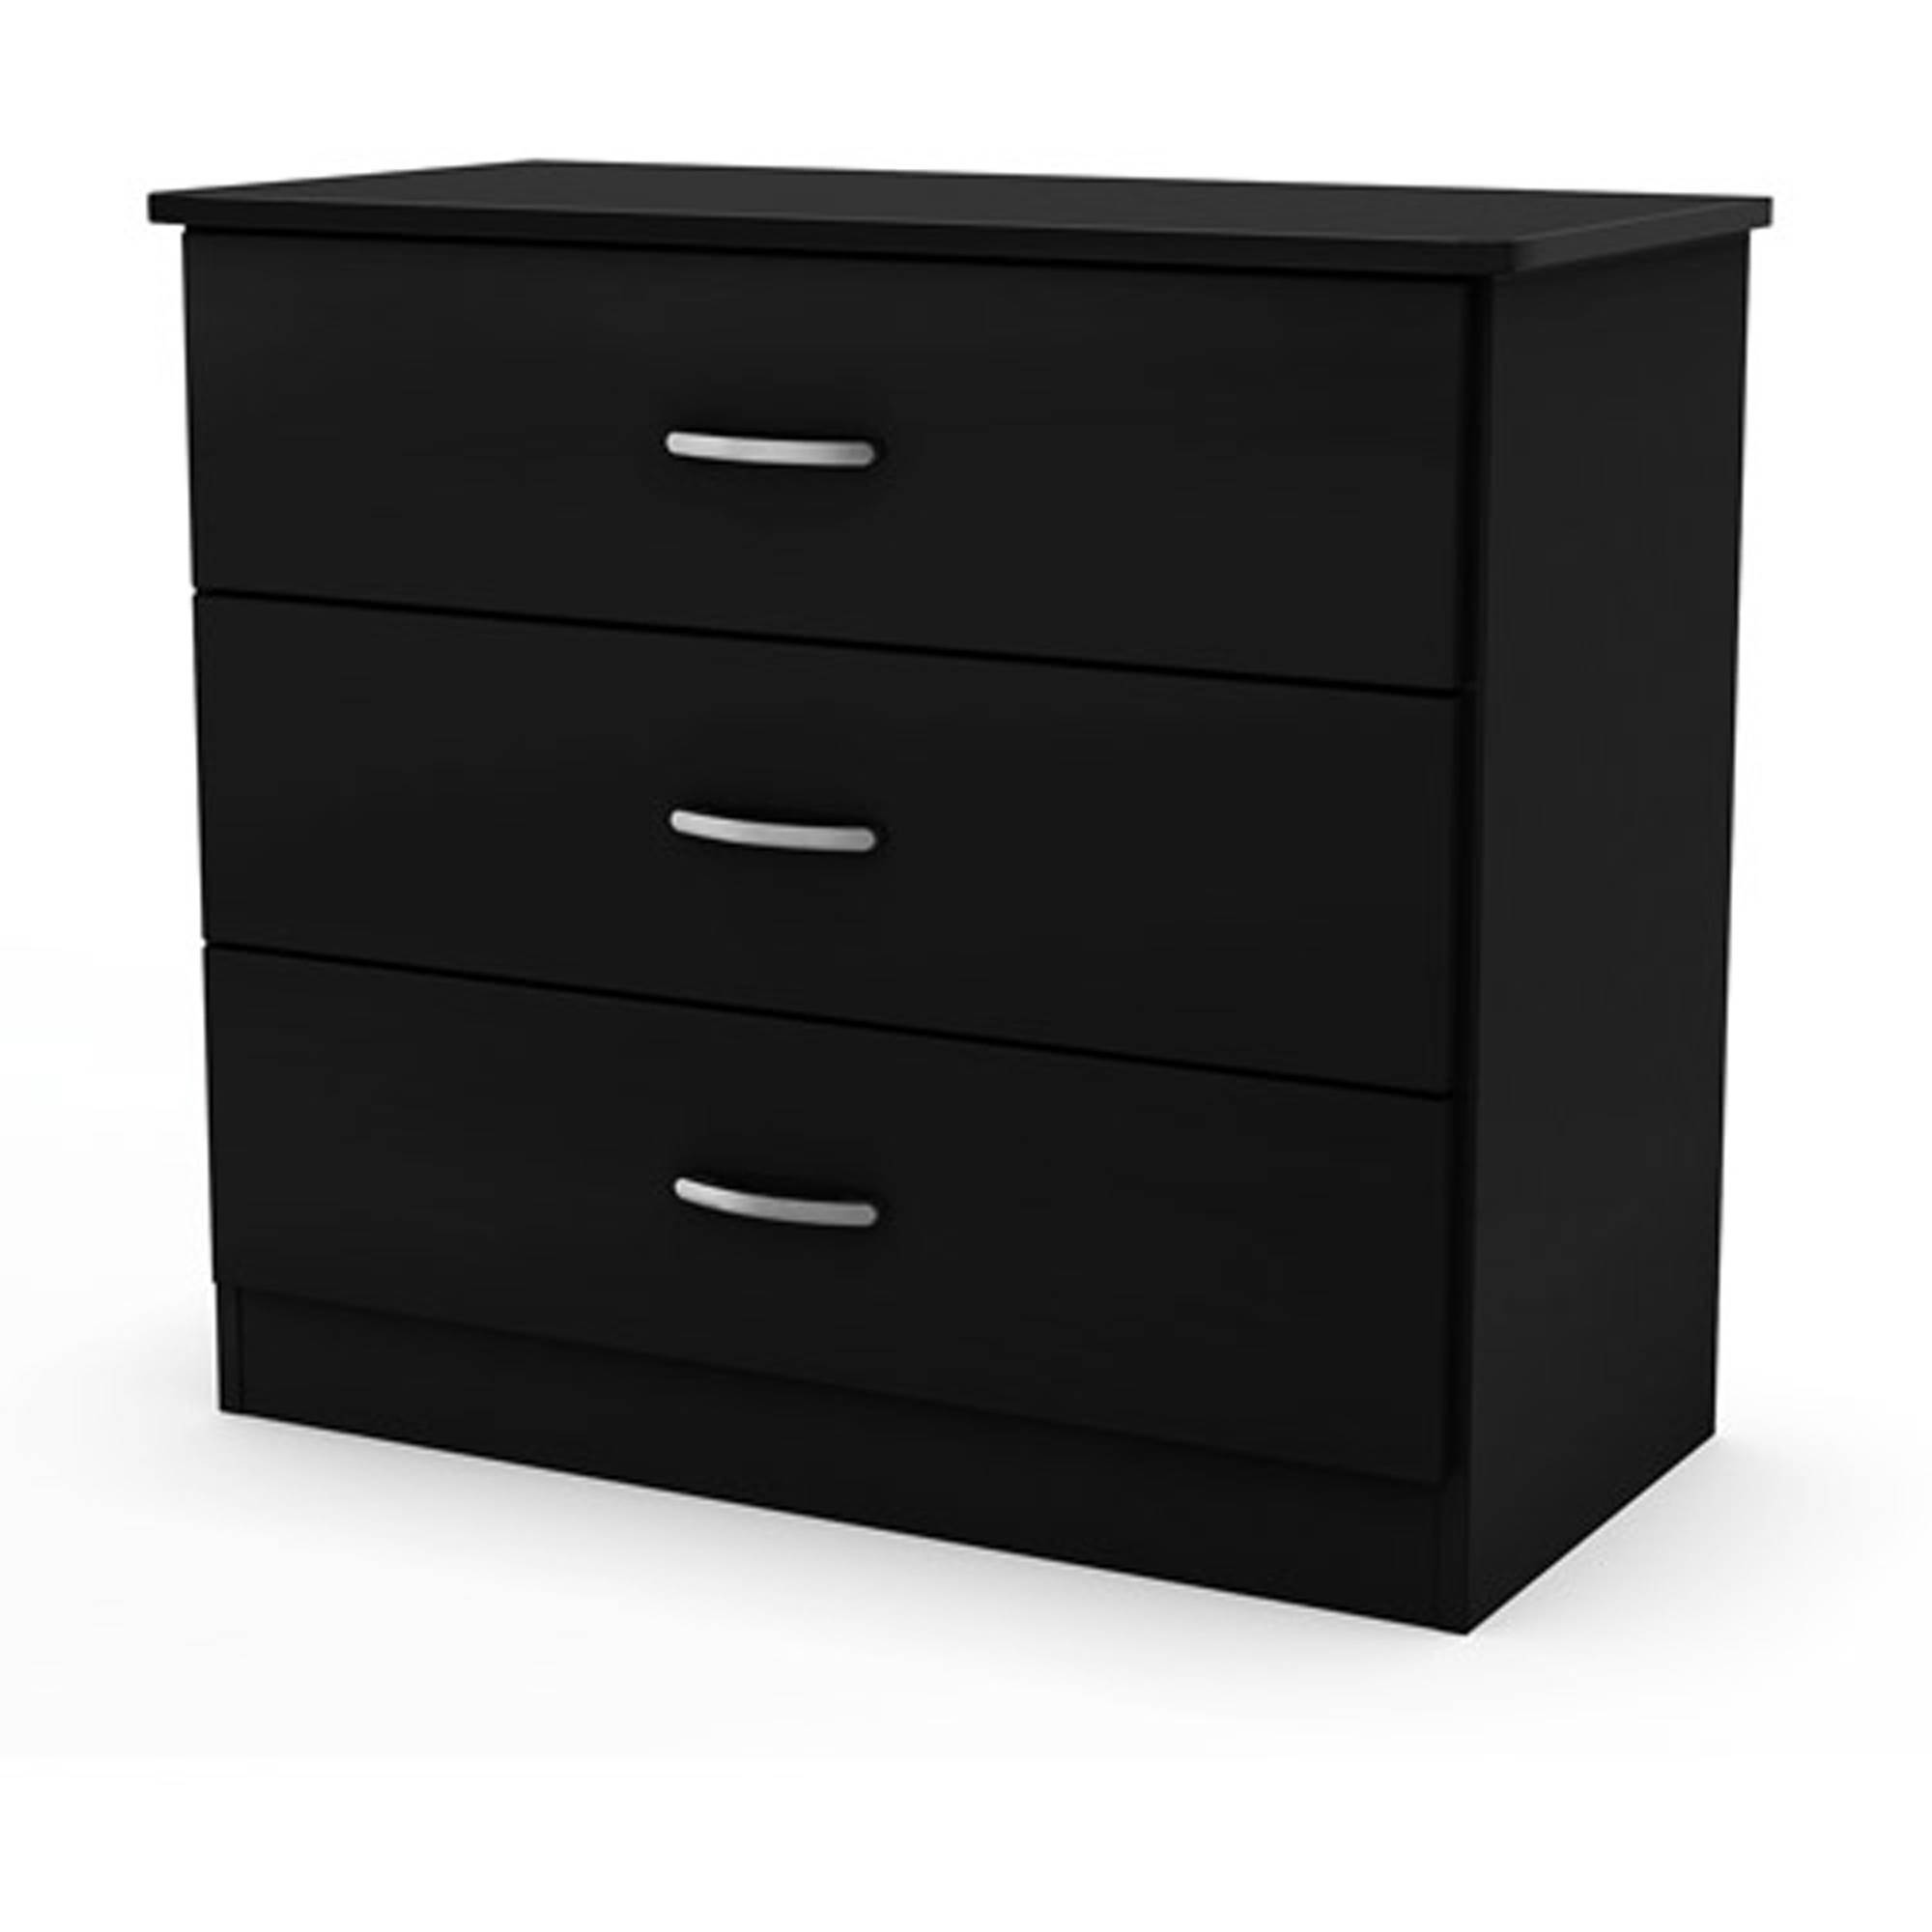 South Shore Smart Basics 3-Drawer Dresser, Multiple Finishes - image 1 of 7